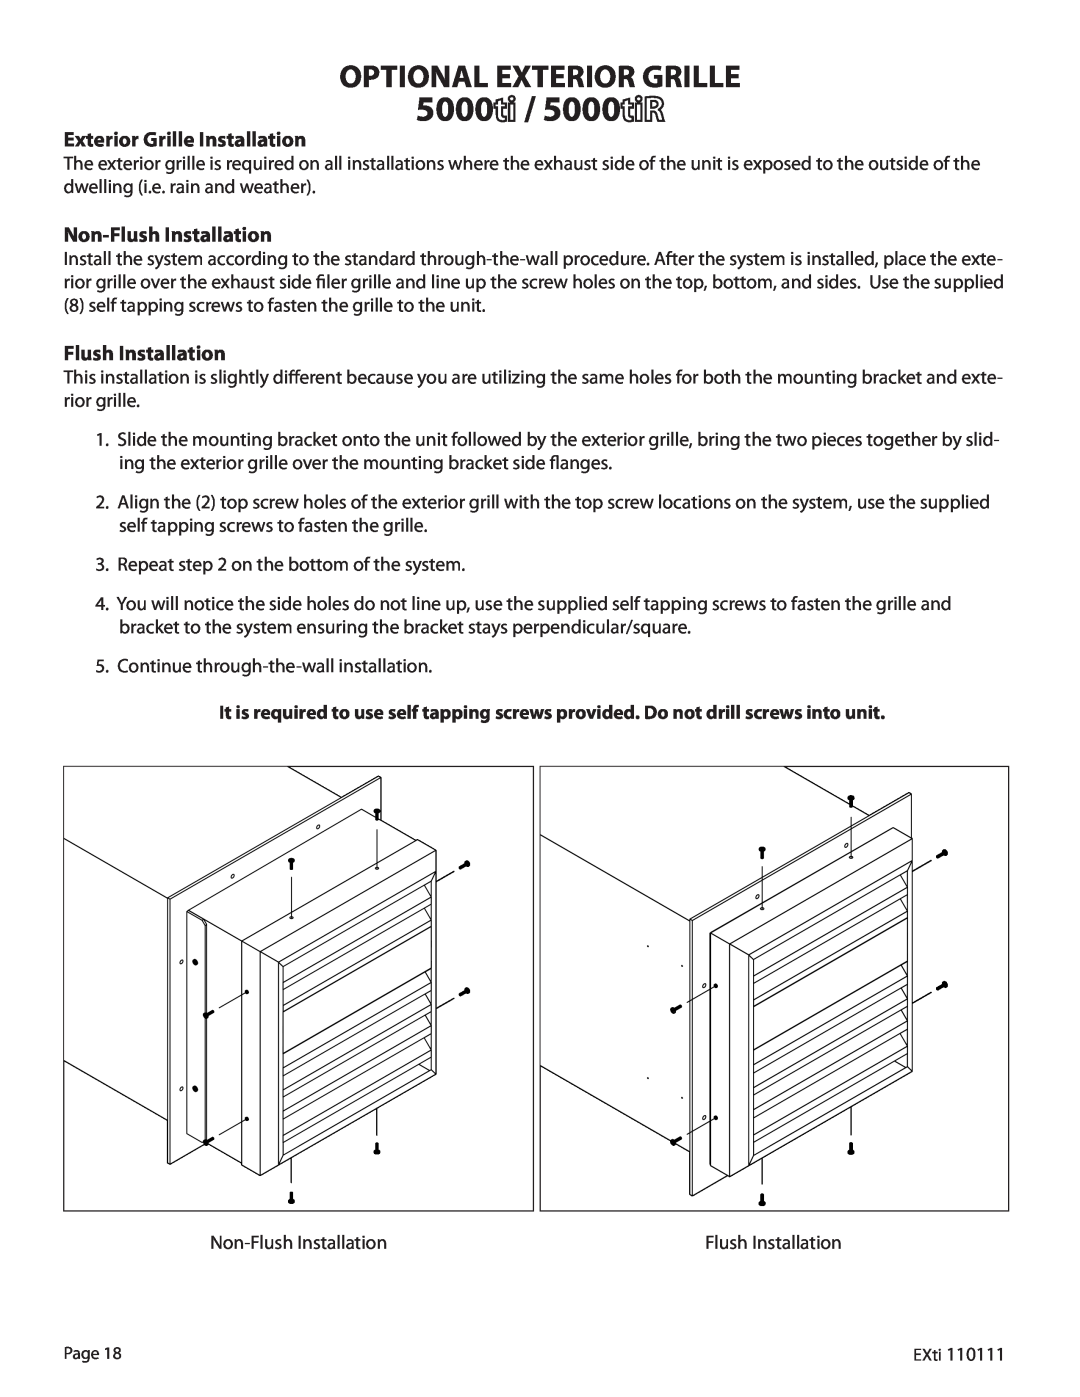 WhisperKool 5000 owner manual Optional Exterior Grille, Exterior Grille Installation, Non-Flush Installation 